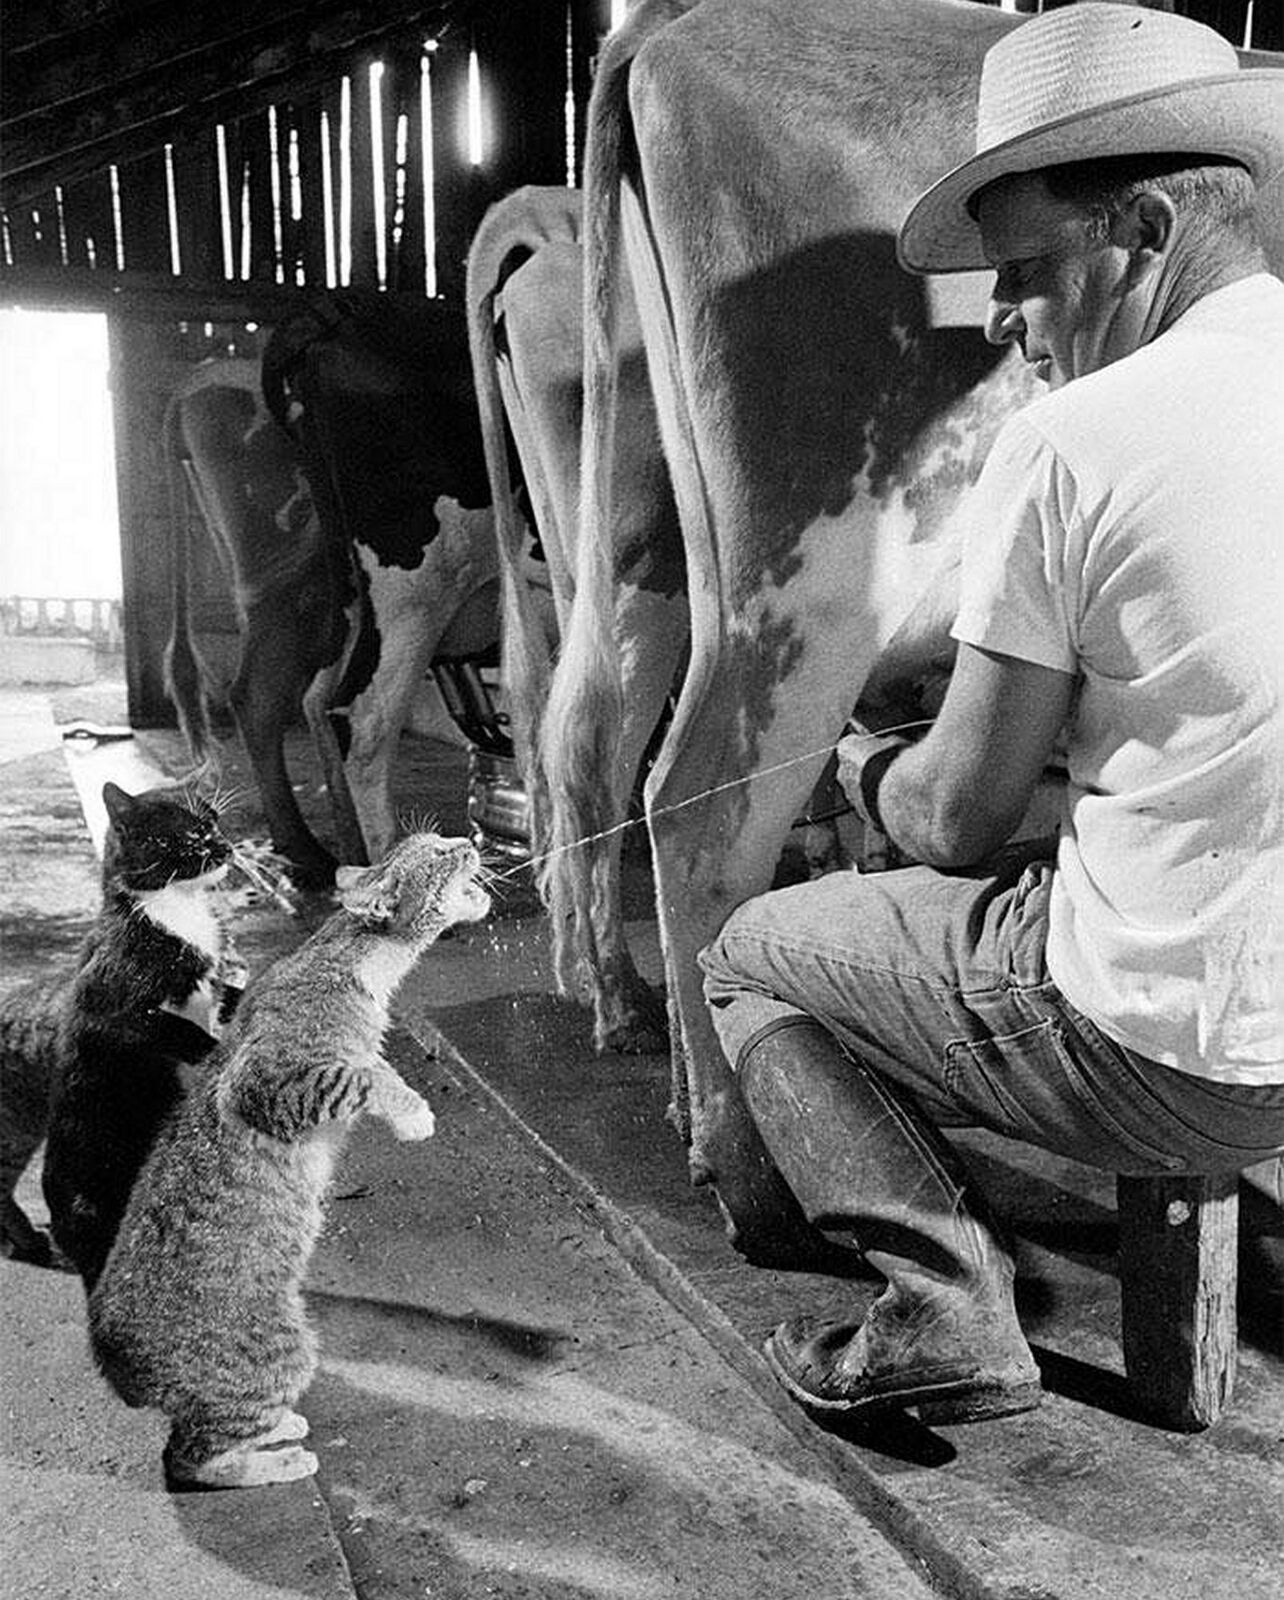 1954 CATS WAITING FOR FRESH MILK  Photo (211-N)